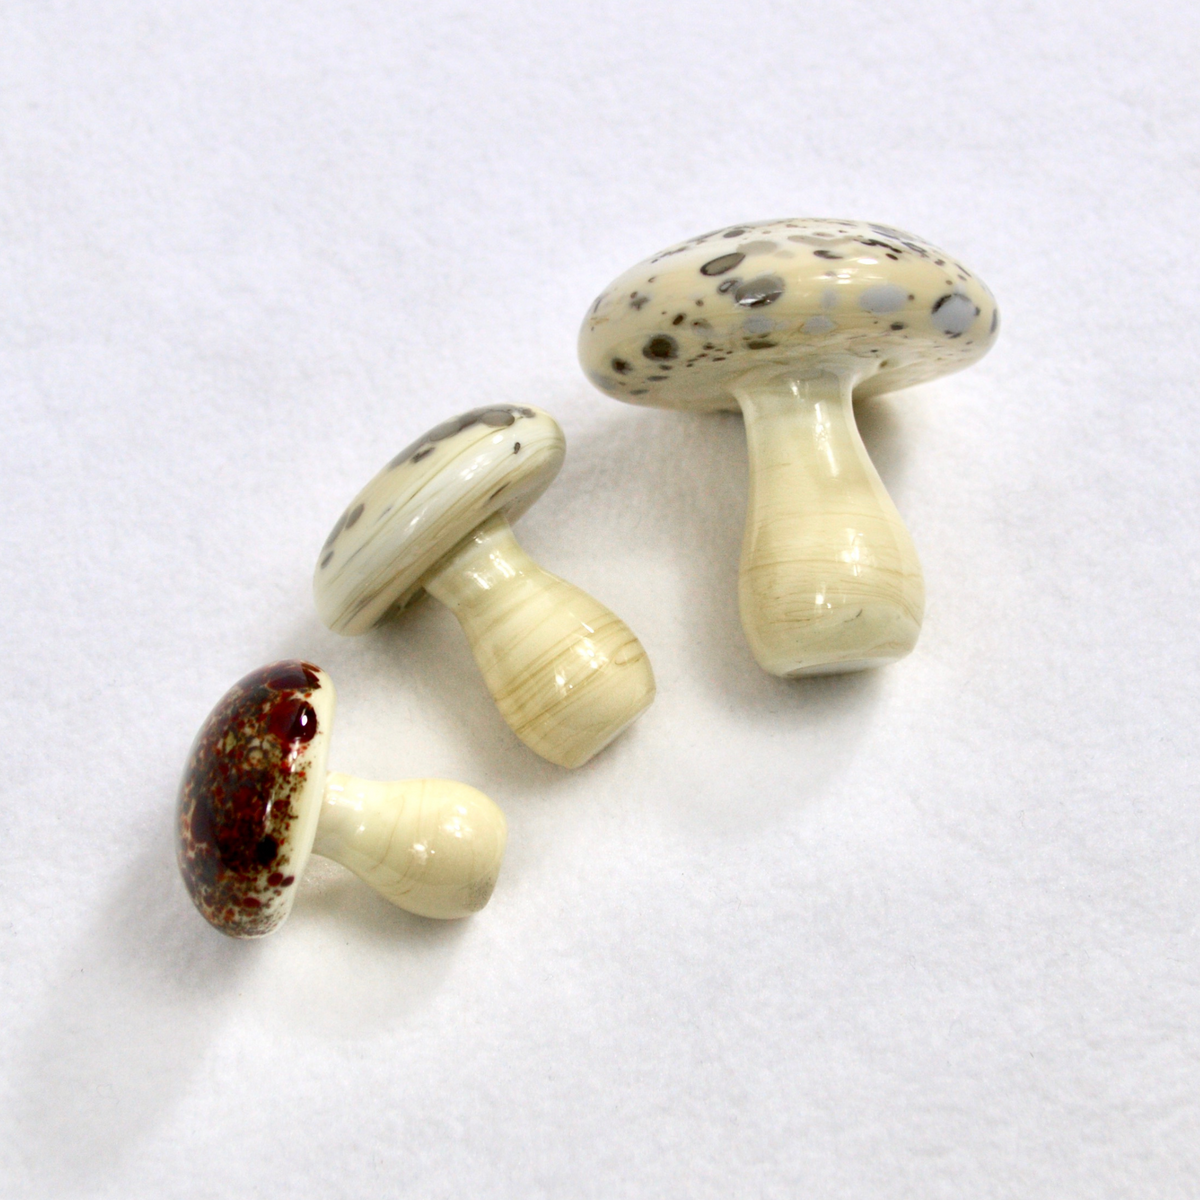 Murano Glass Mushrooms, set of 3, Made in Italy - My Italian Decor